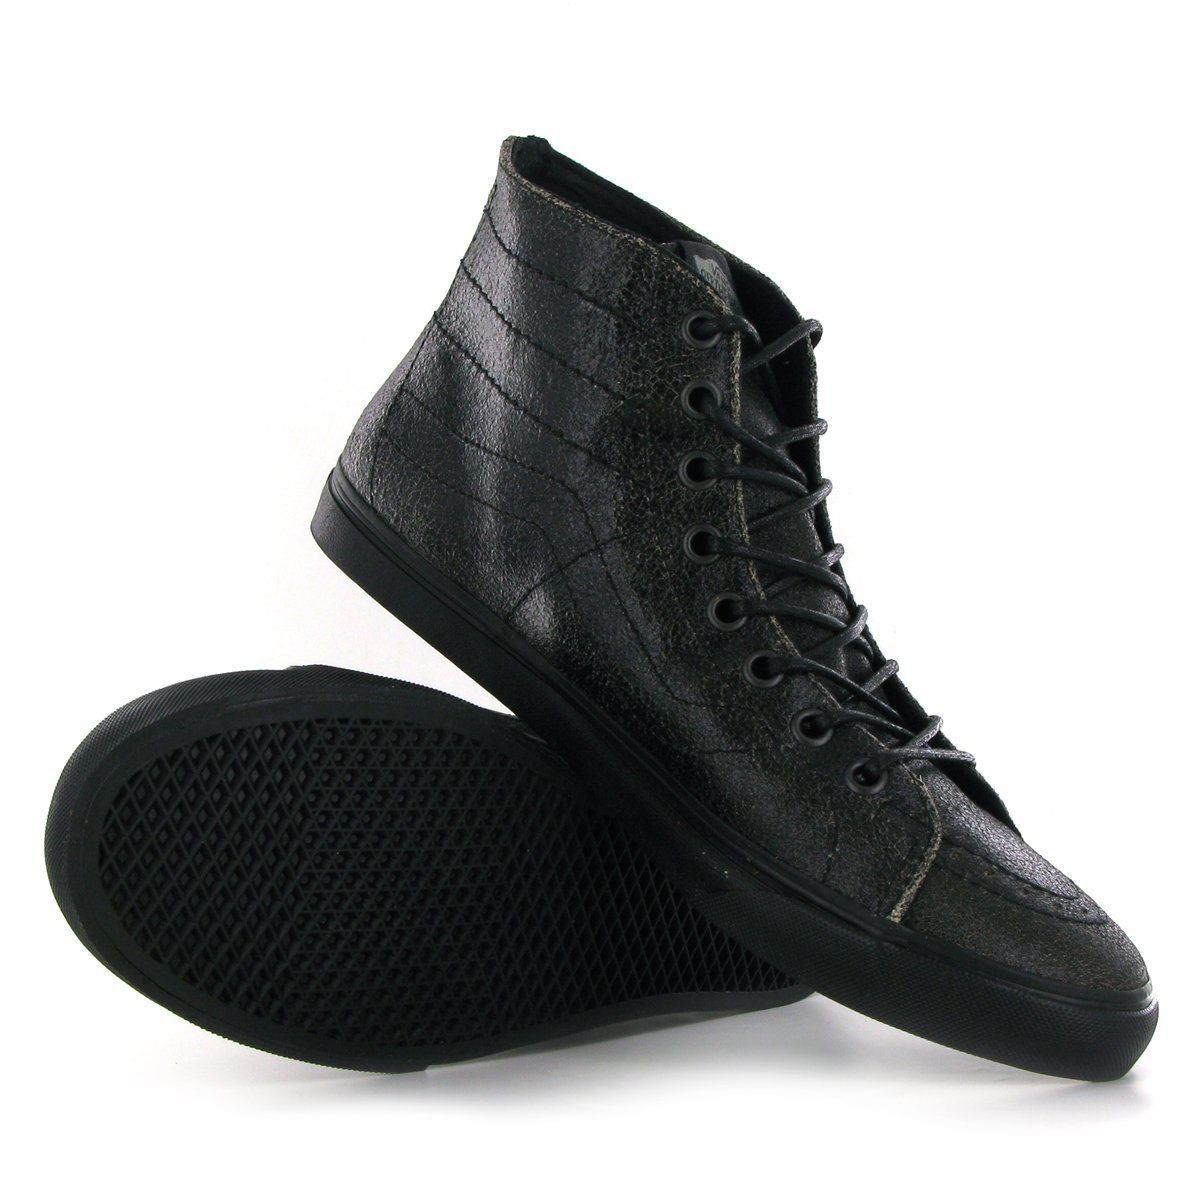 Authentic Vans Sk8 Hi D Lo Cracked Leather Black Womens Skate Shoe